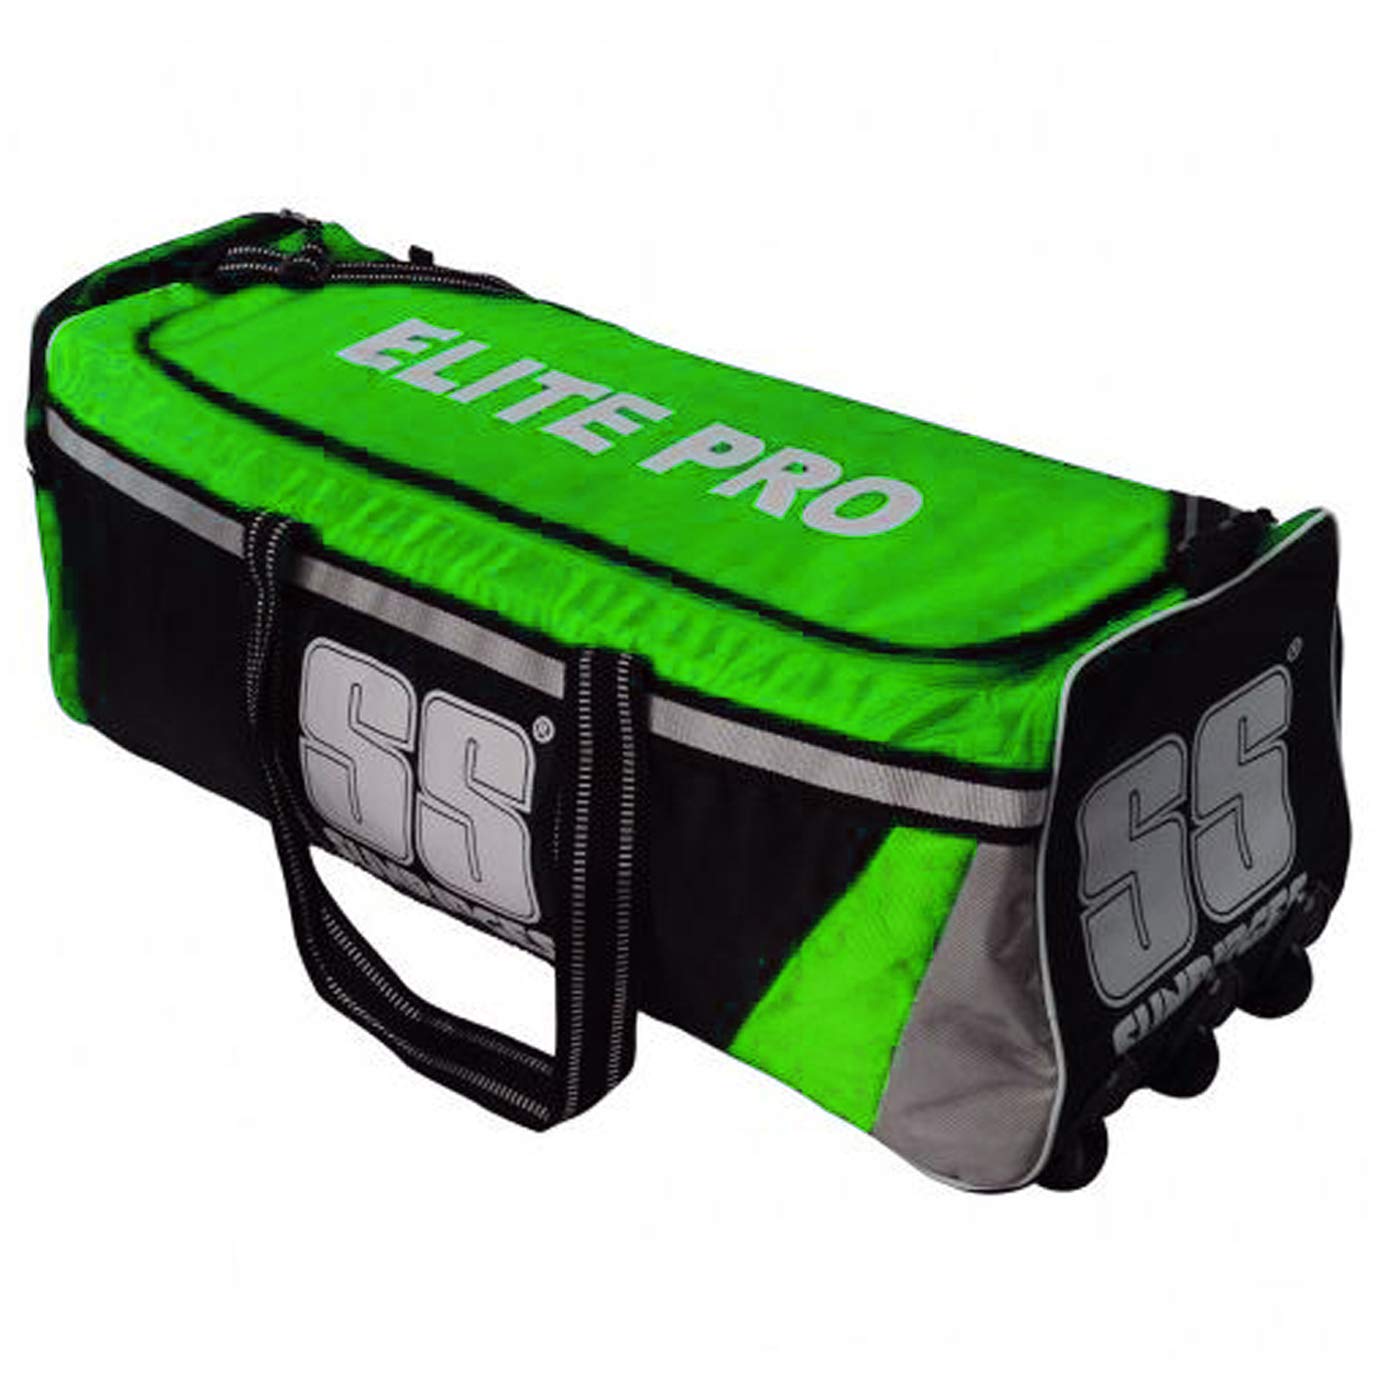 SS Double Wheel Cricket Kit Bag - Elie Pro (Black Green) - Best Price online Prokicksports.com